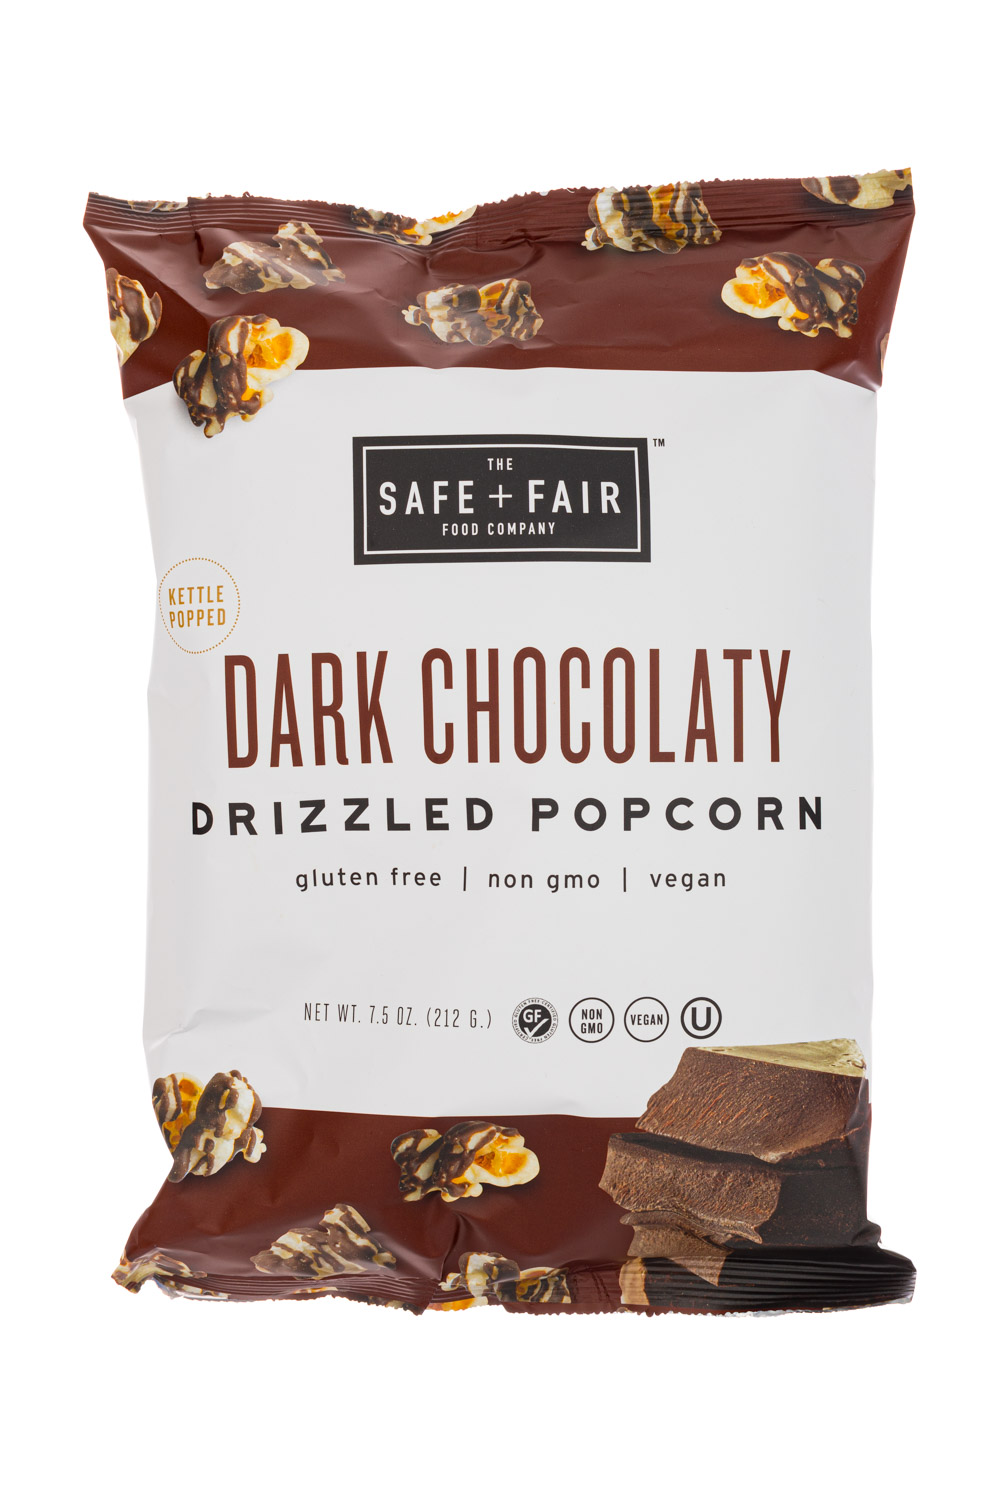 Dark Chocolaty Drizzled PopCorn 2020